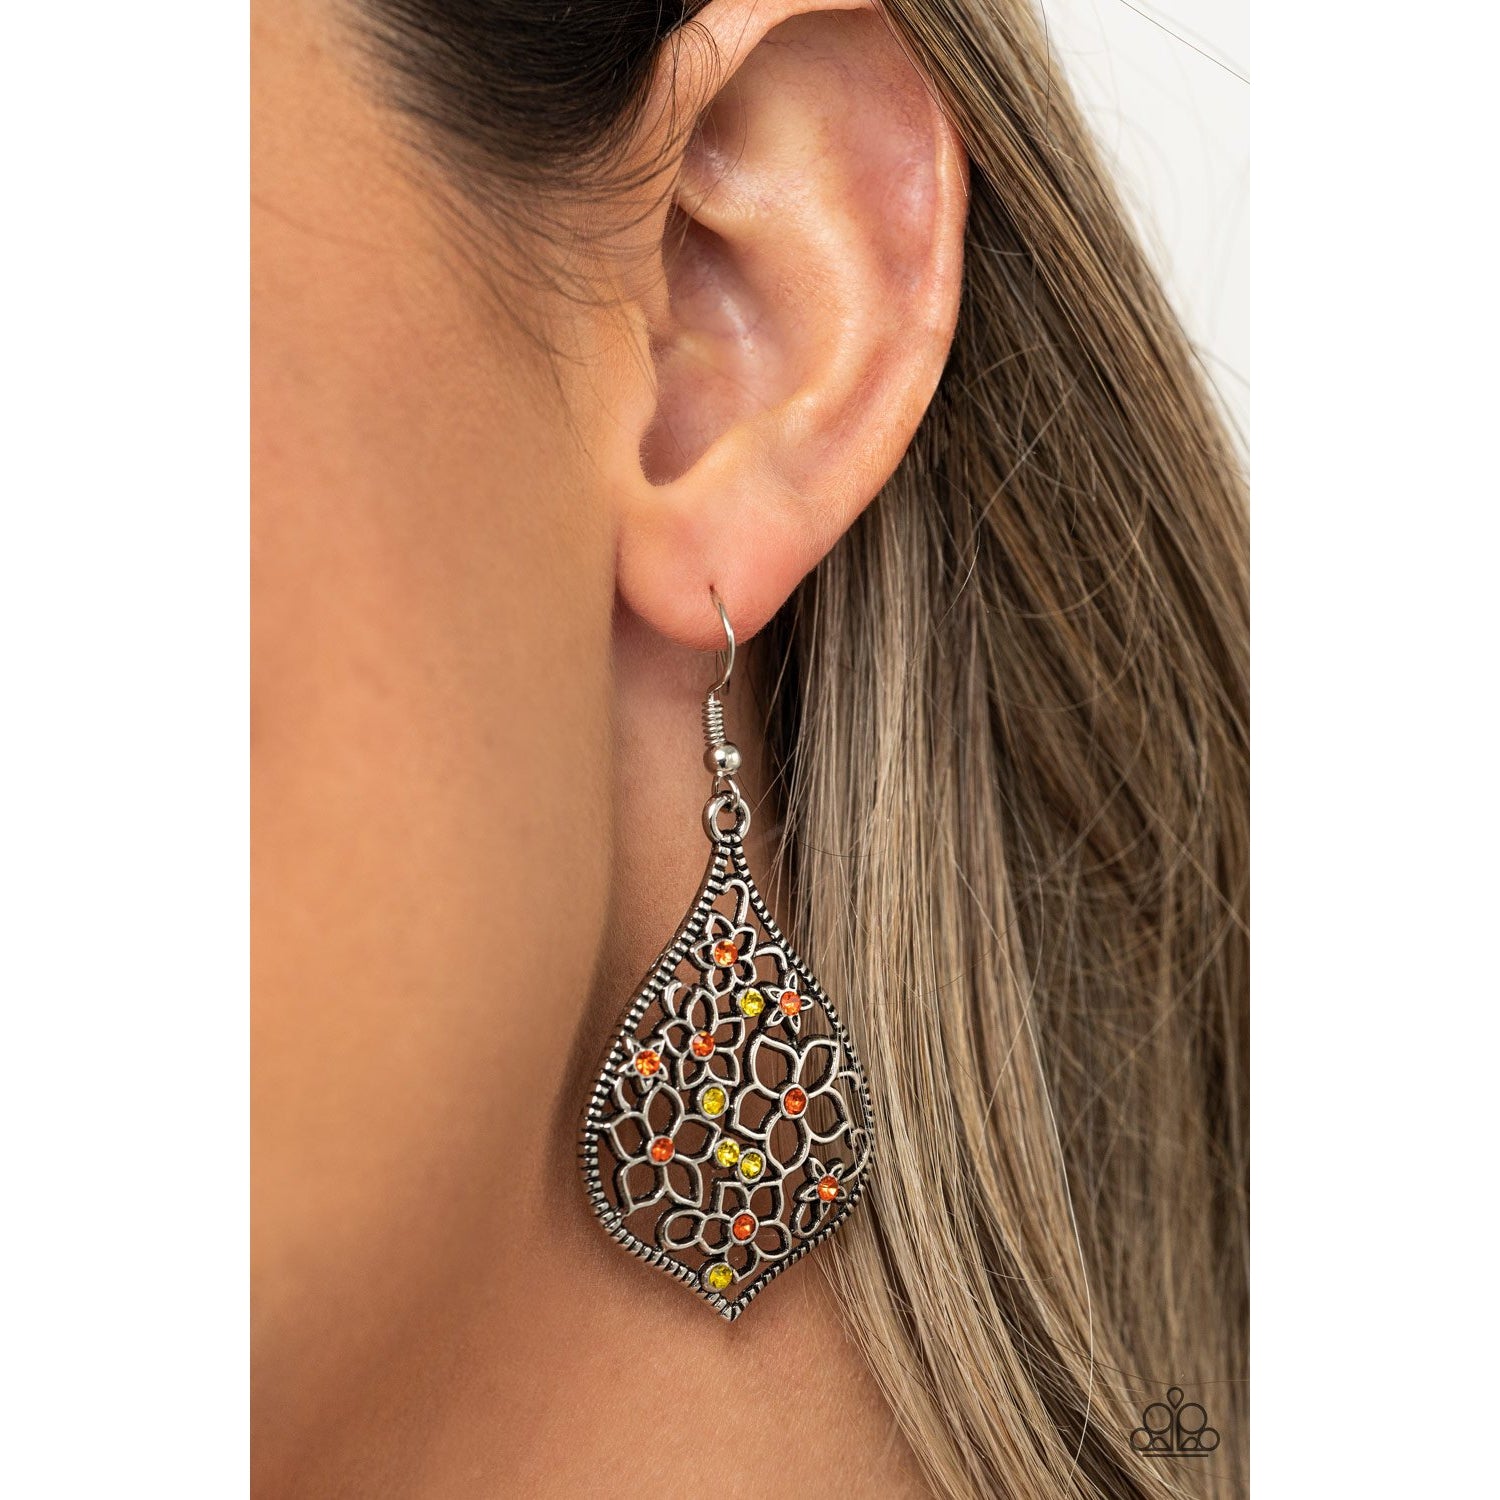 Full Out Florals - Multi Rhinestone Earrings - Paparazzi Accessories - GlaMarous Titi Jewels